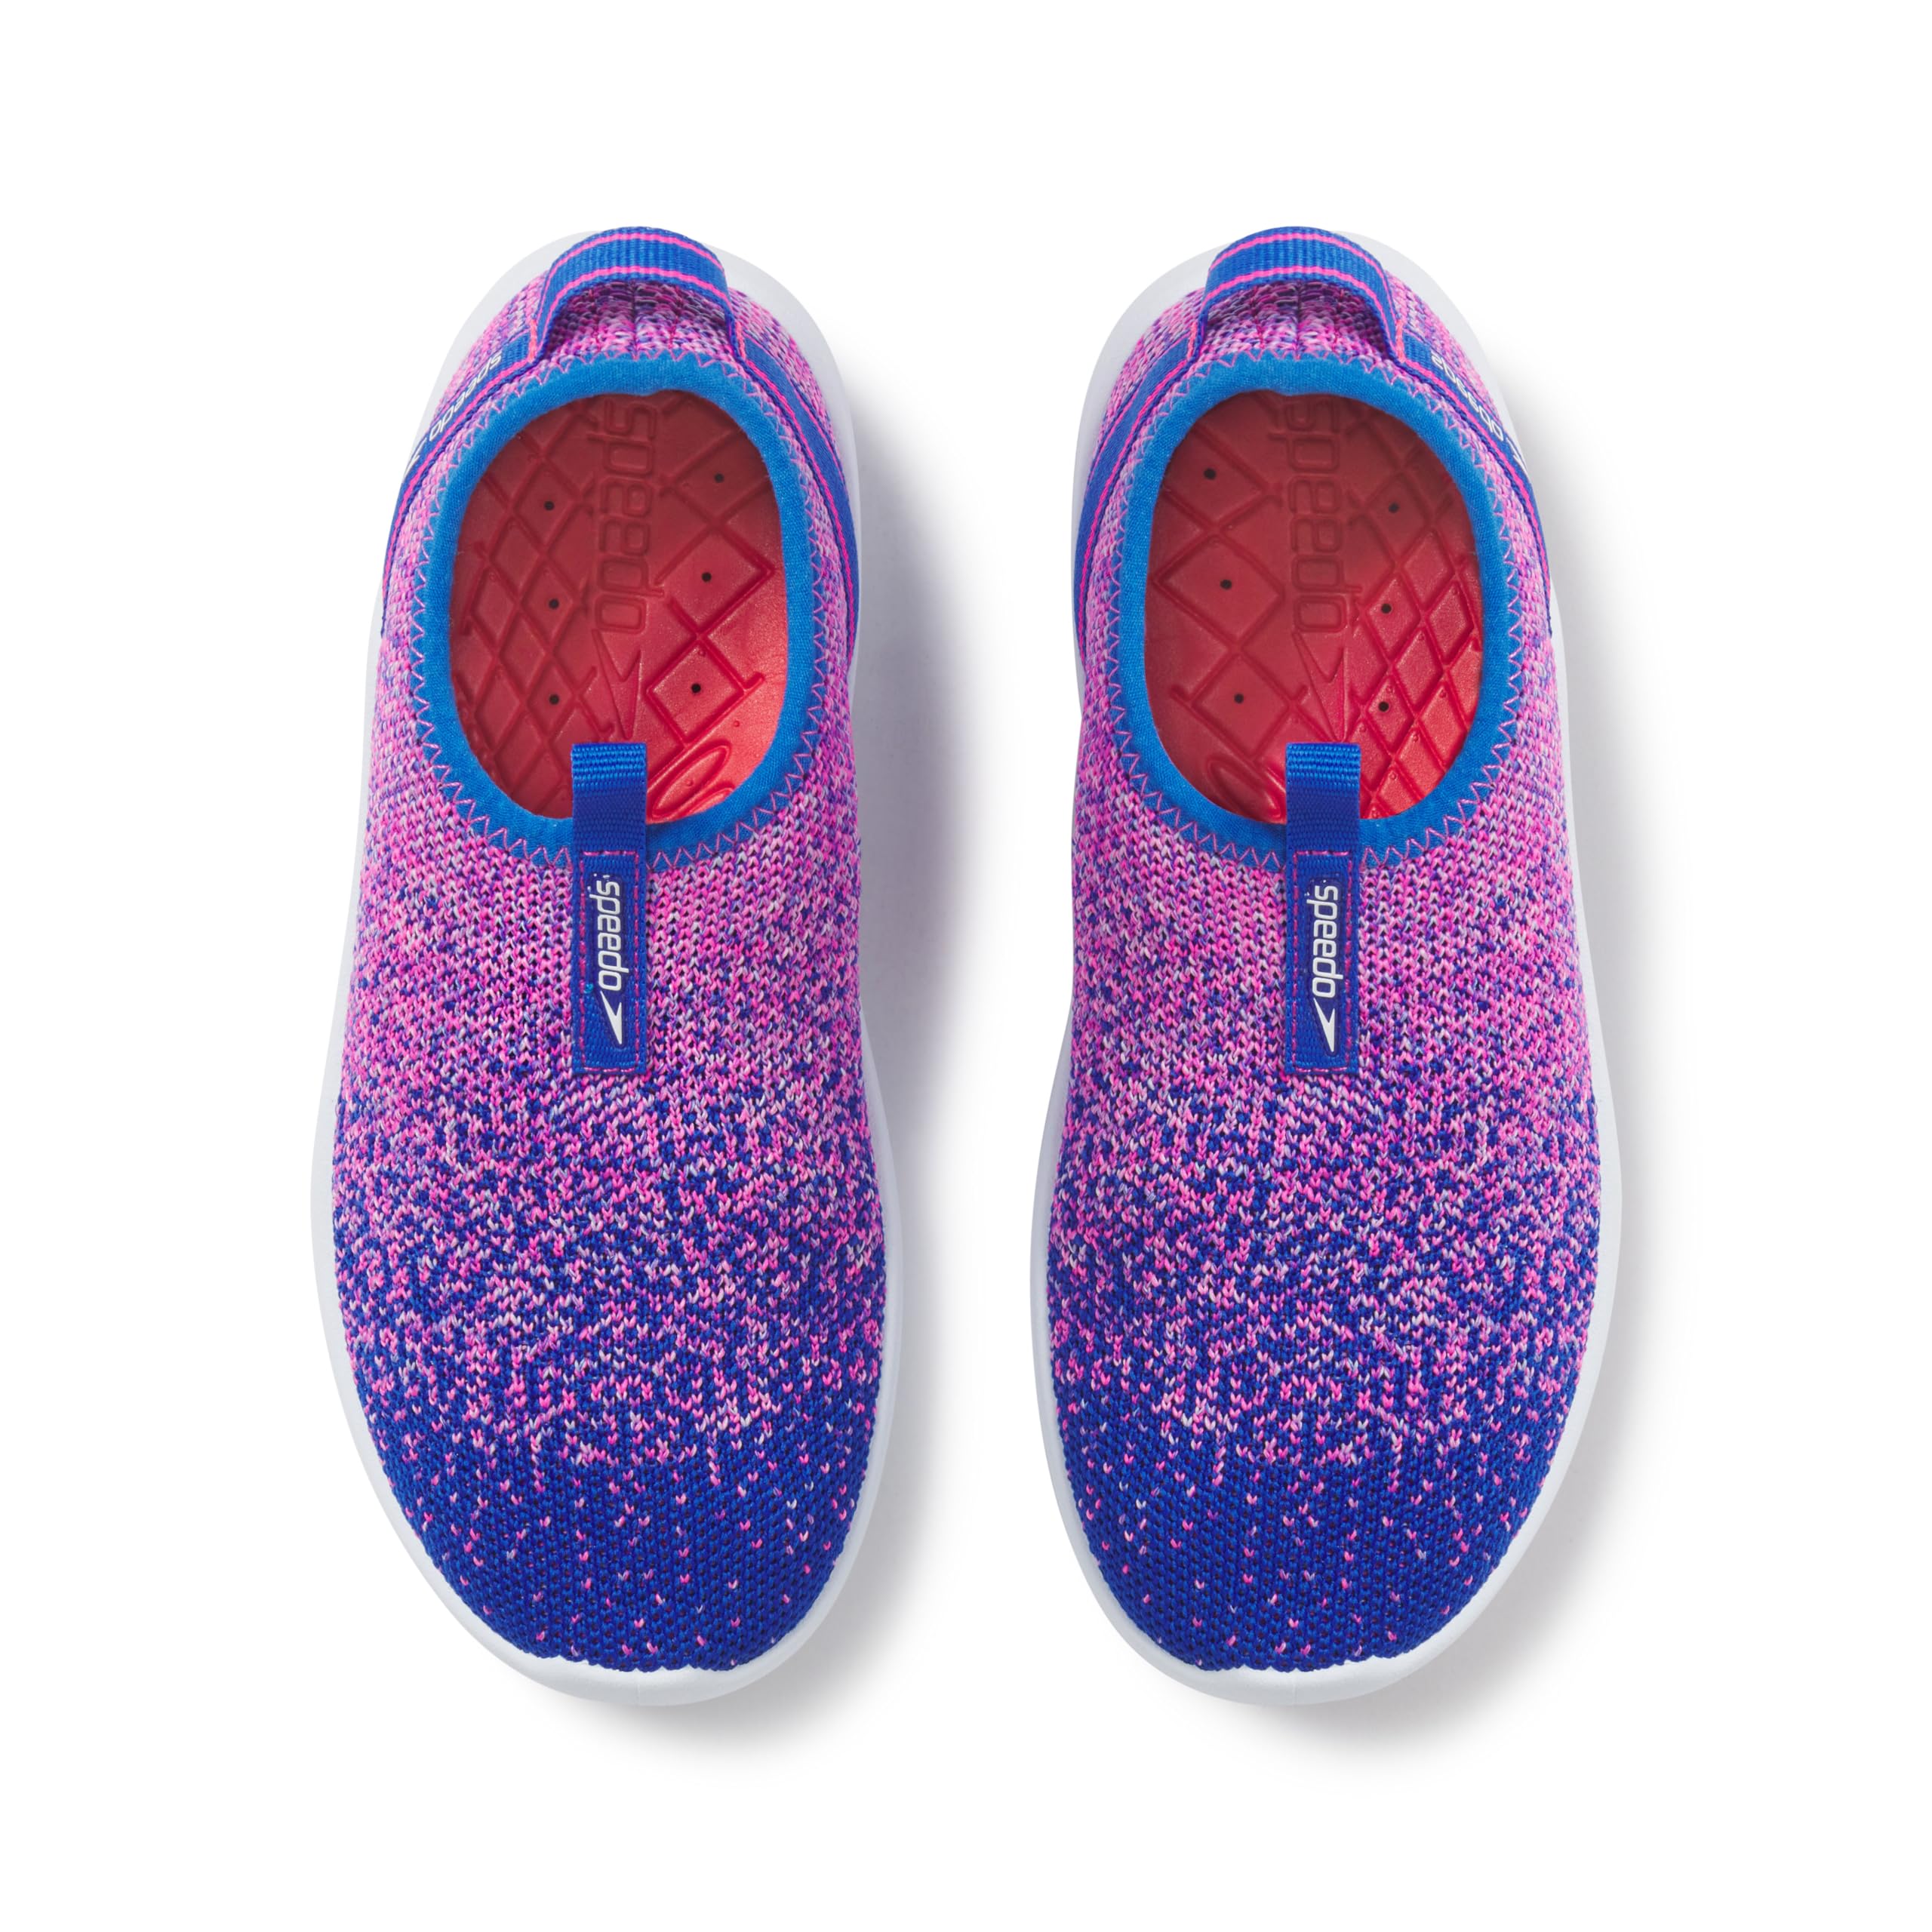 Speedo Water Shoe Surfknit Pro Kids, Turkish Sea/Flare Pink, 1 US Unisex Big